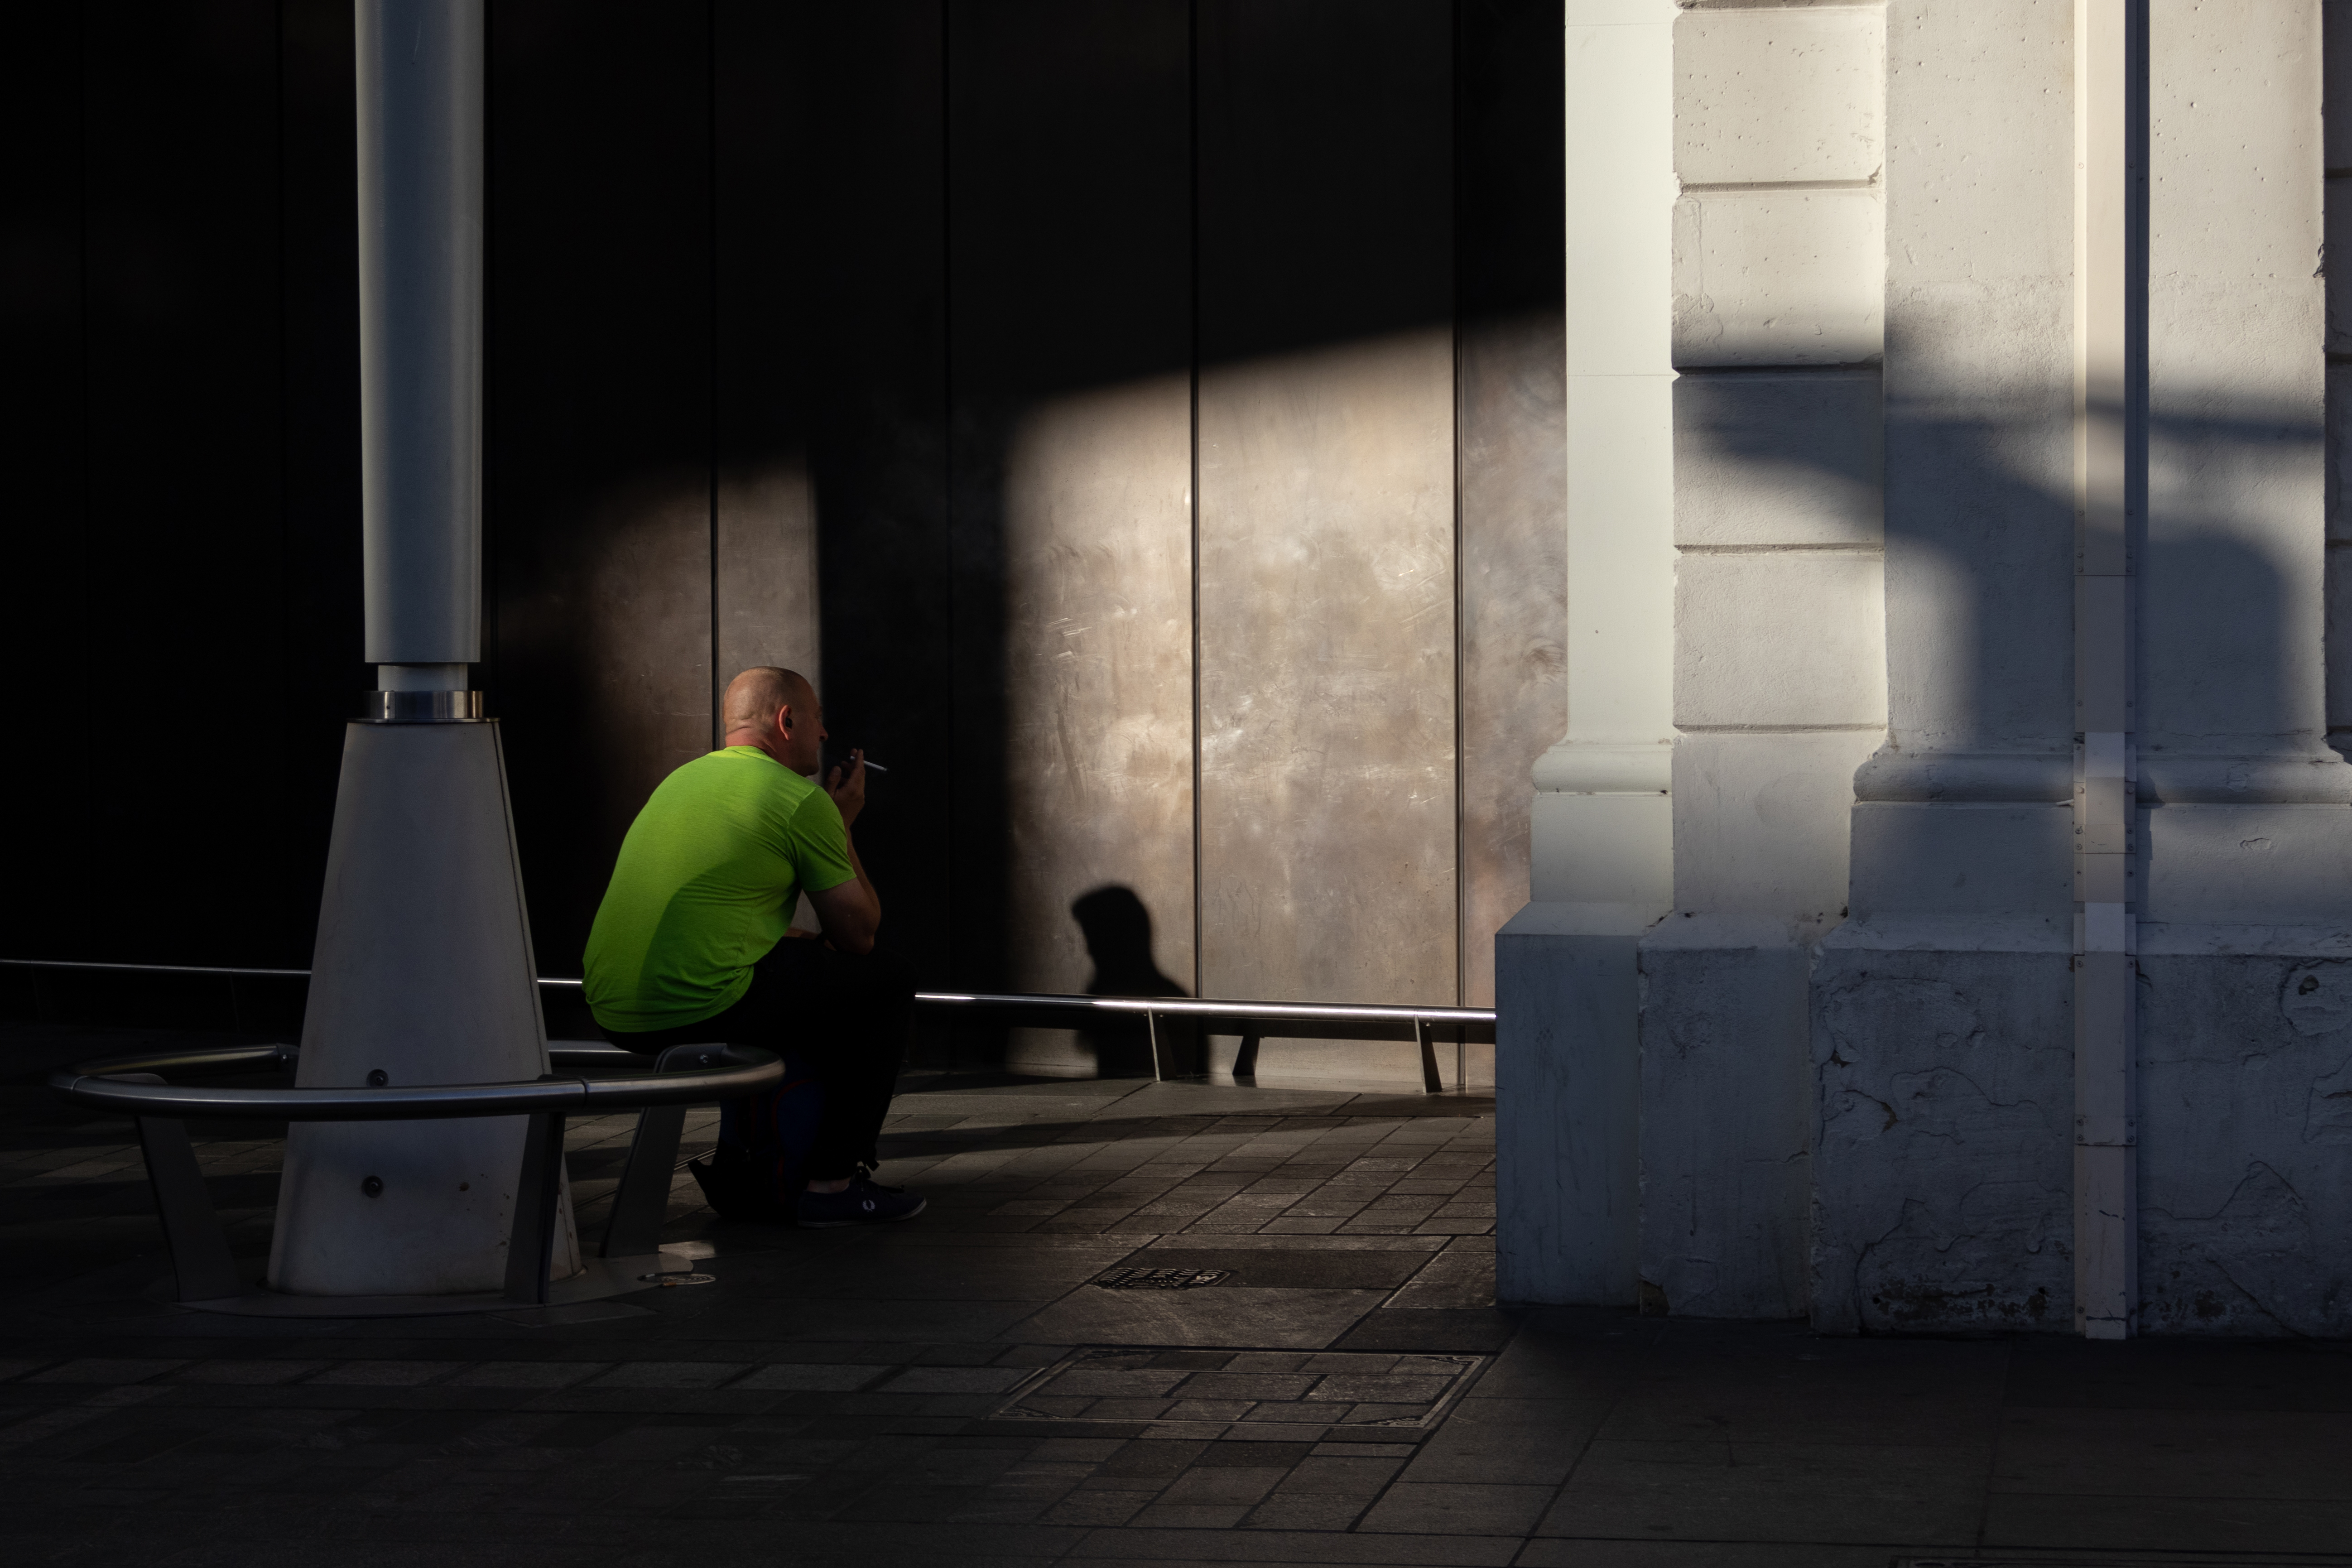 A man sitting outside a train station